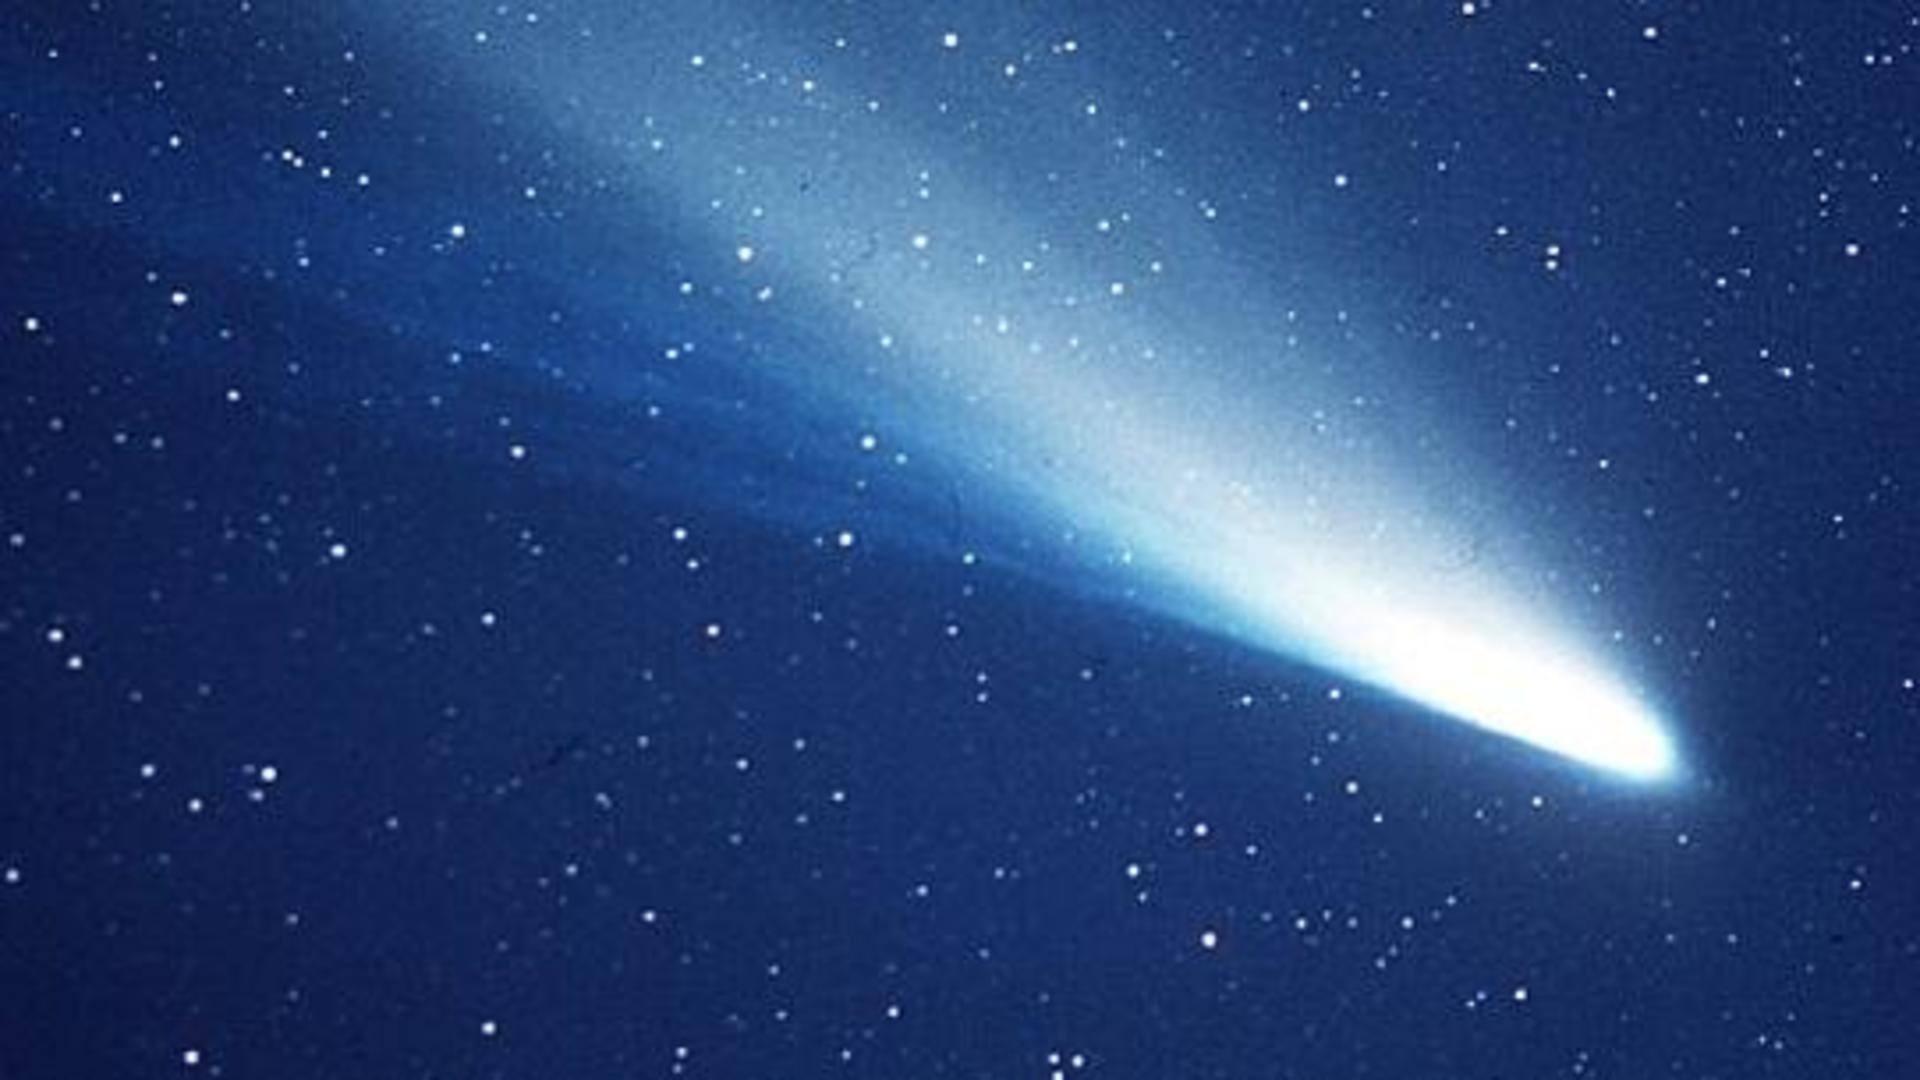 Eta Aquarids meteor shower peaks today: How to watch